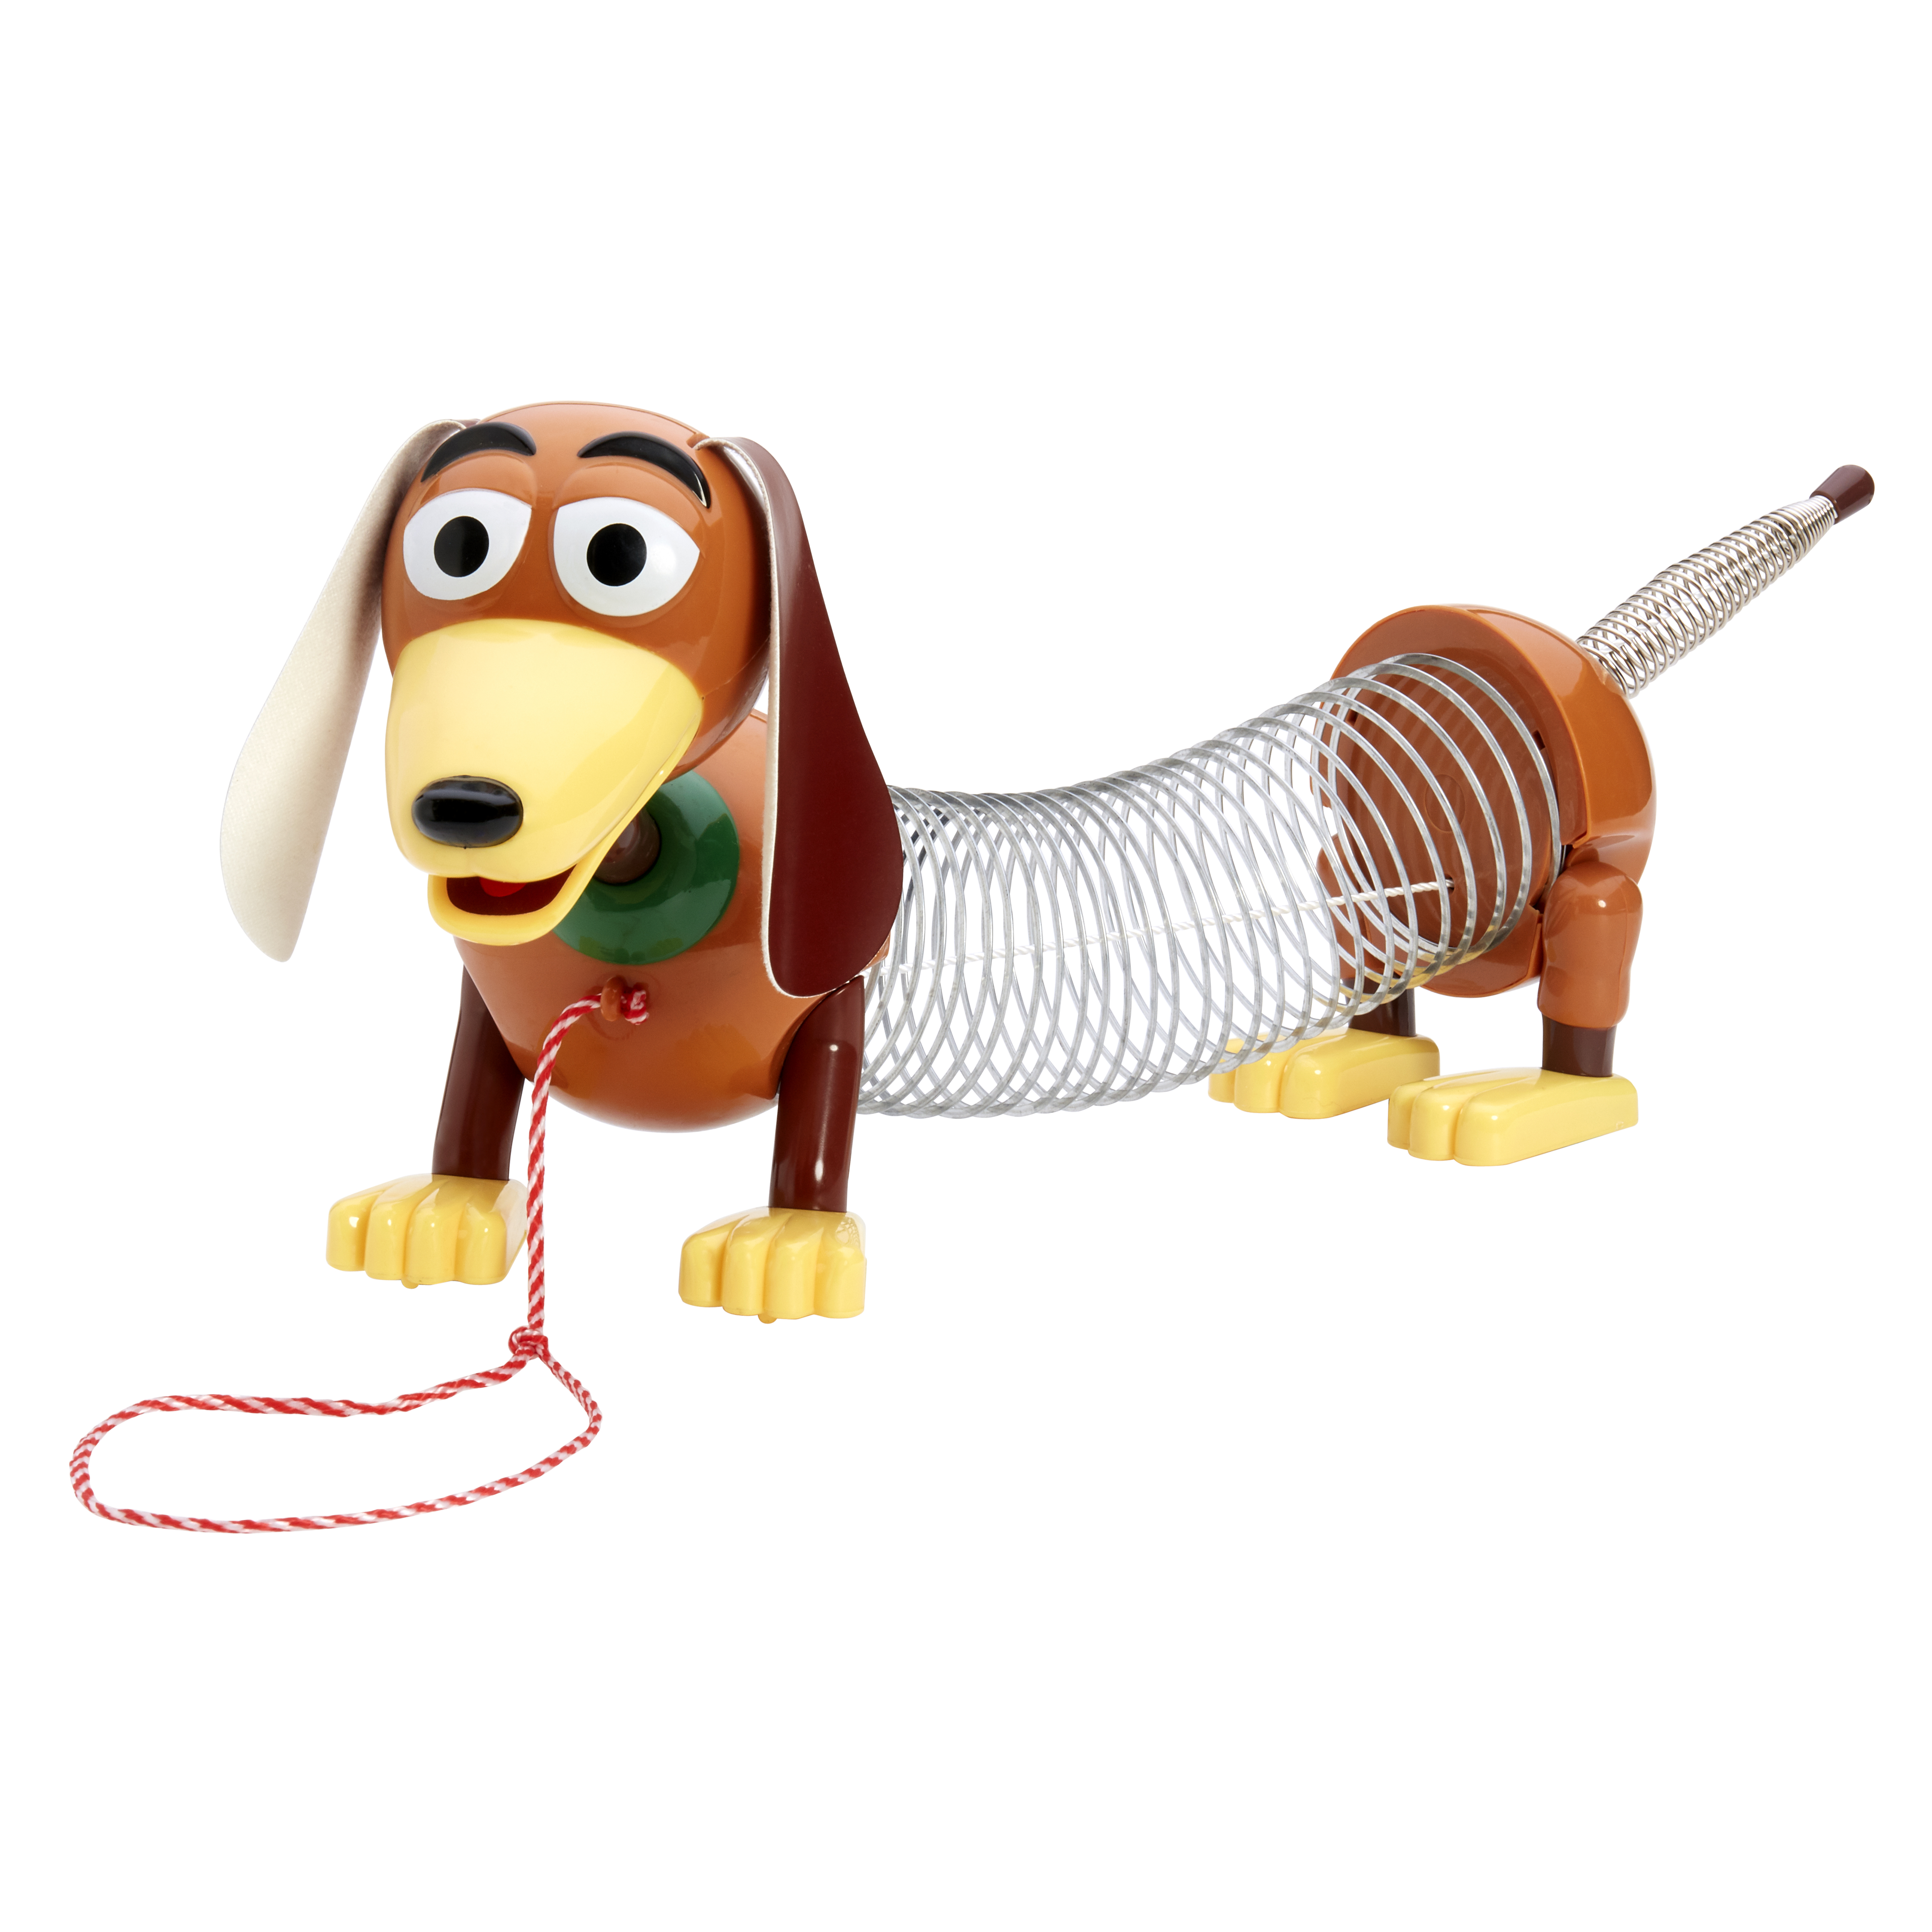 Disney Pixar Toy Story 4 Slinky Dog - image 5 of 7